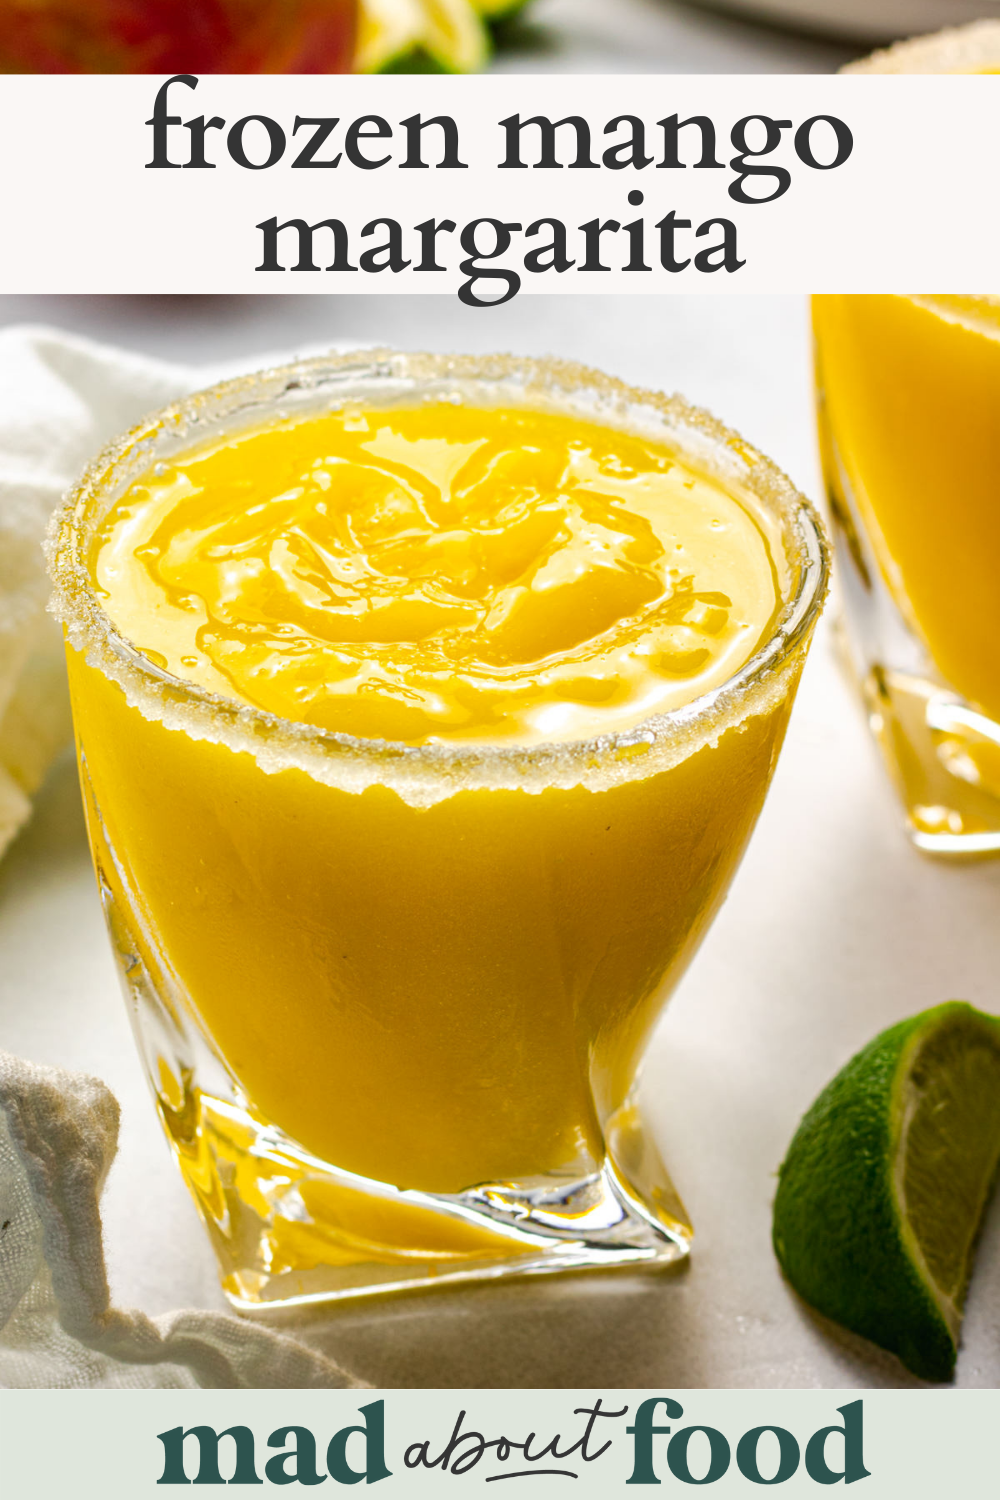 Image for pinning frozen mango margarita recipe on Pinterest